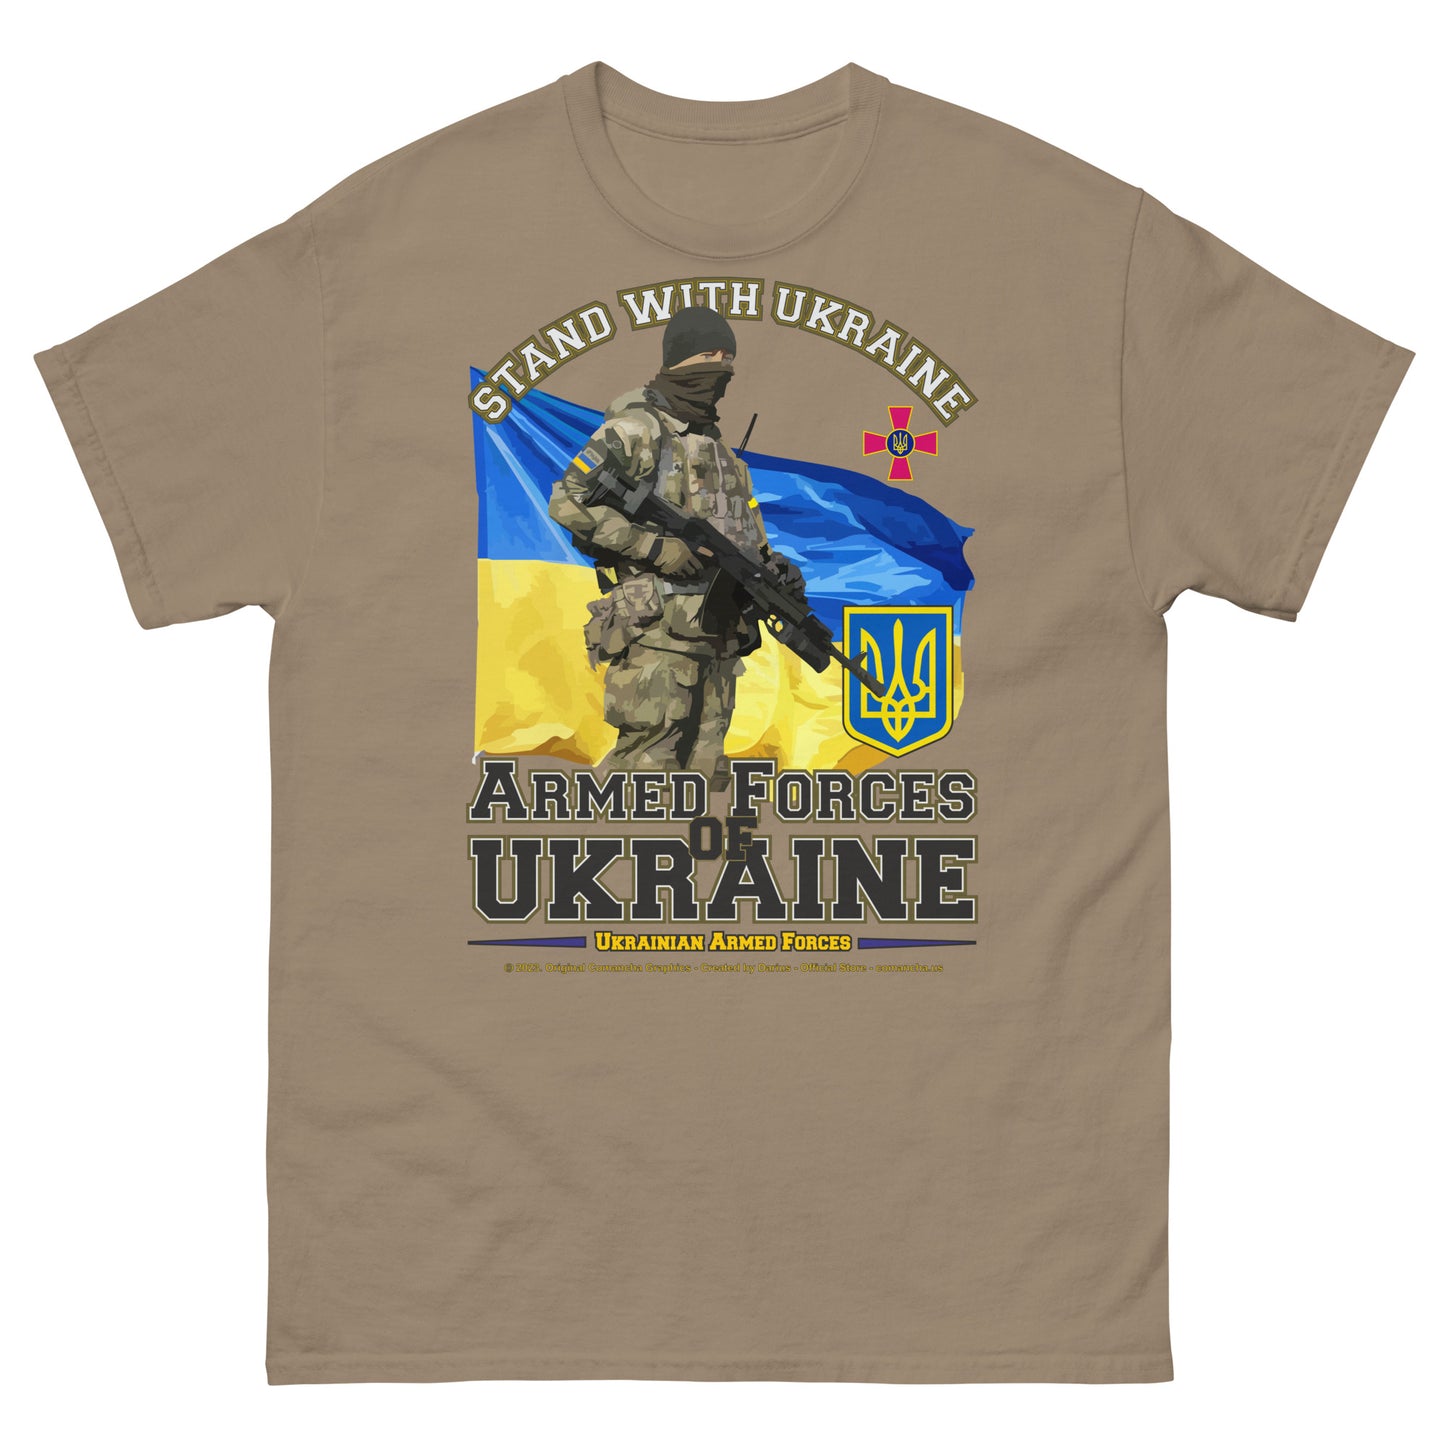 Stand with Ukraine t-shirt, Comancha t-shirts store,